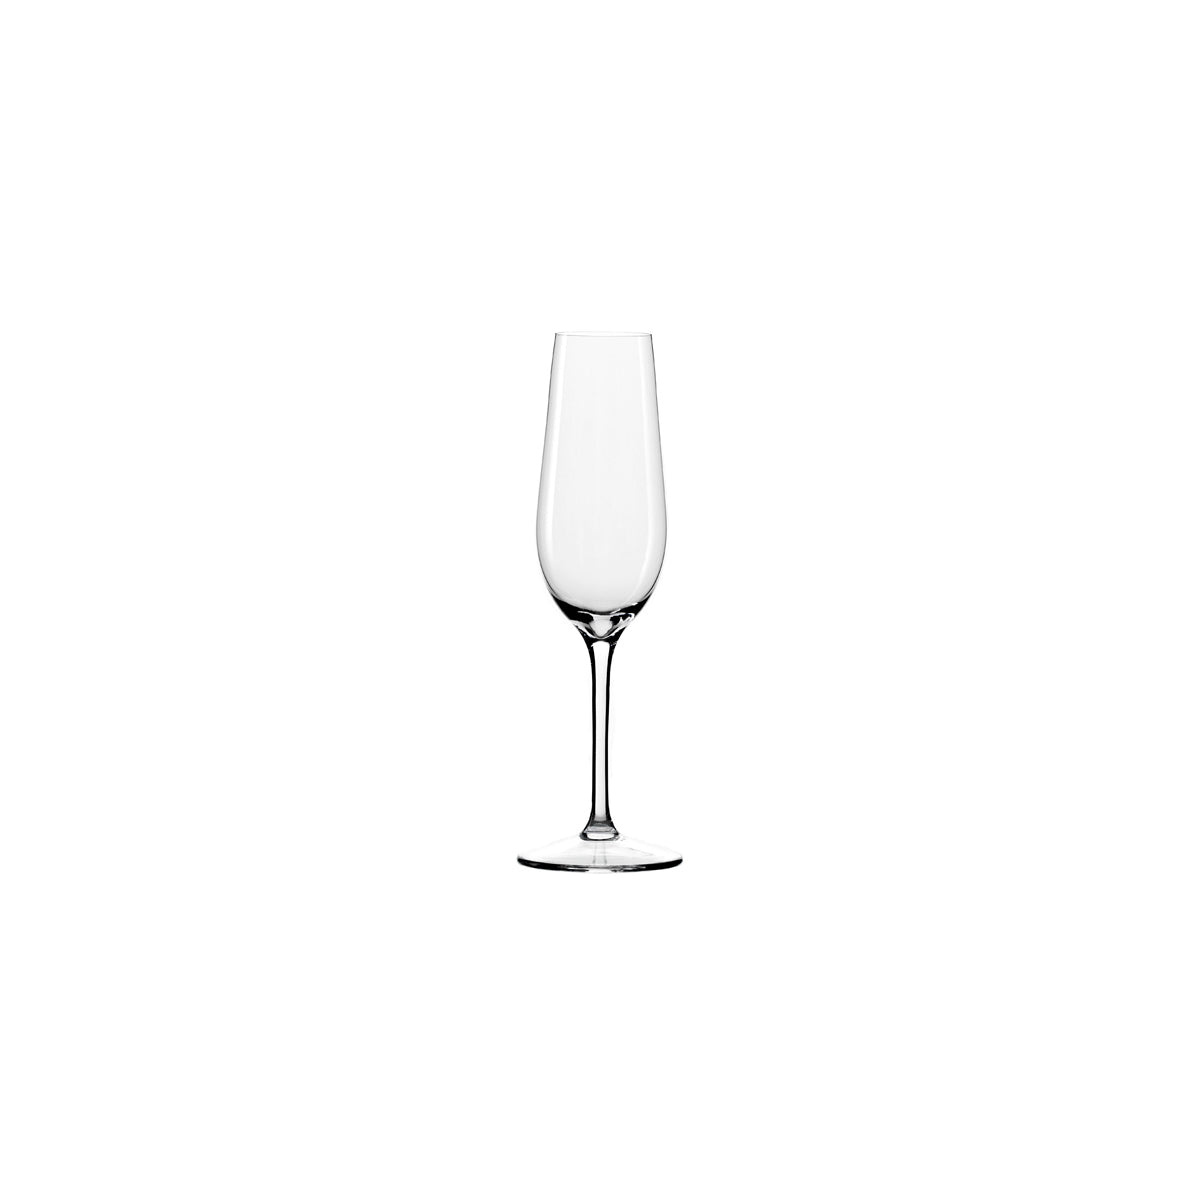 360-812 Stolzle Event Champagne 195ml Tomkin Australia Hospitality Supplies